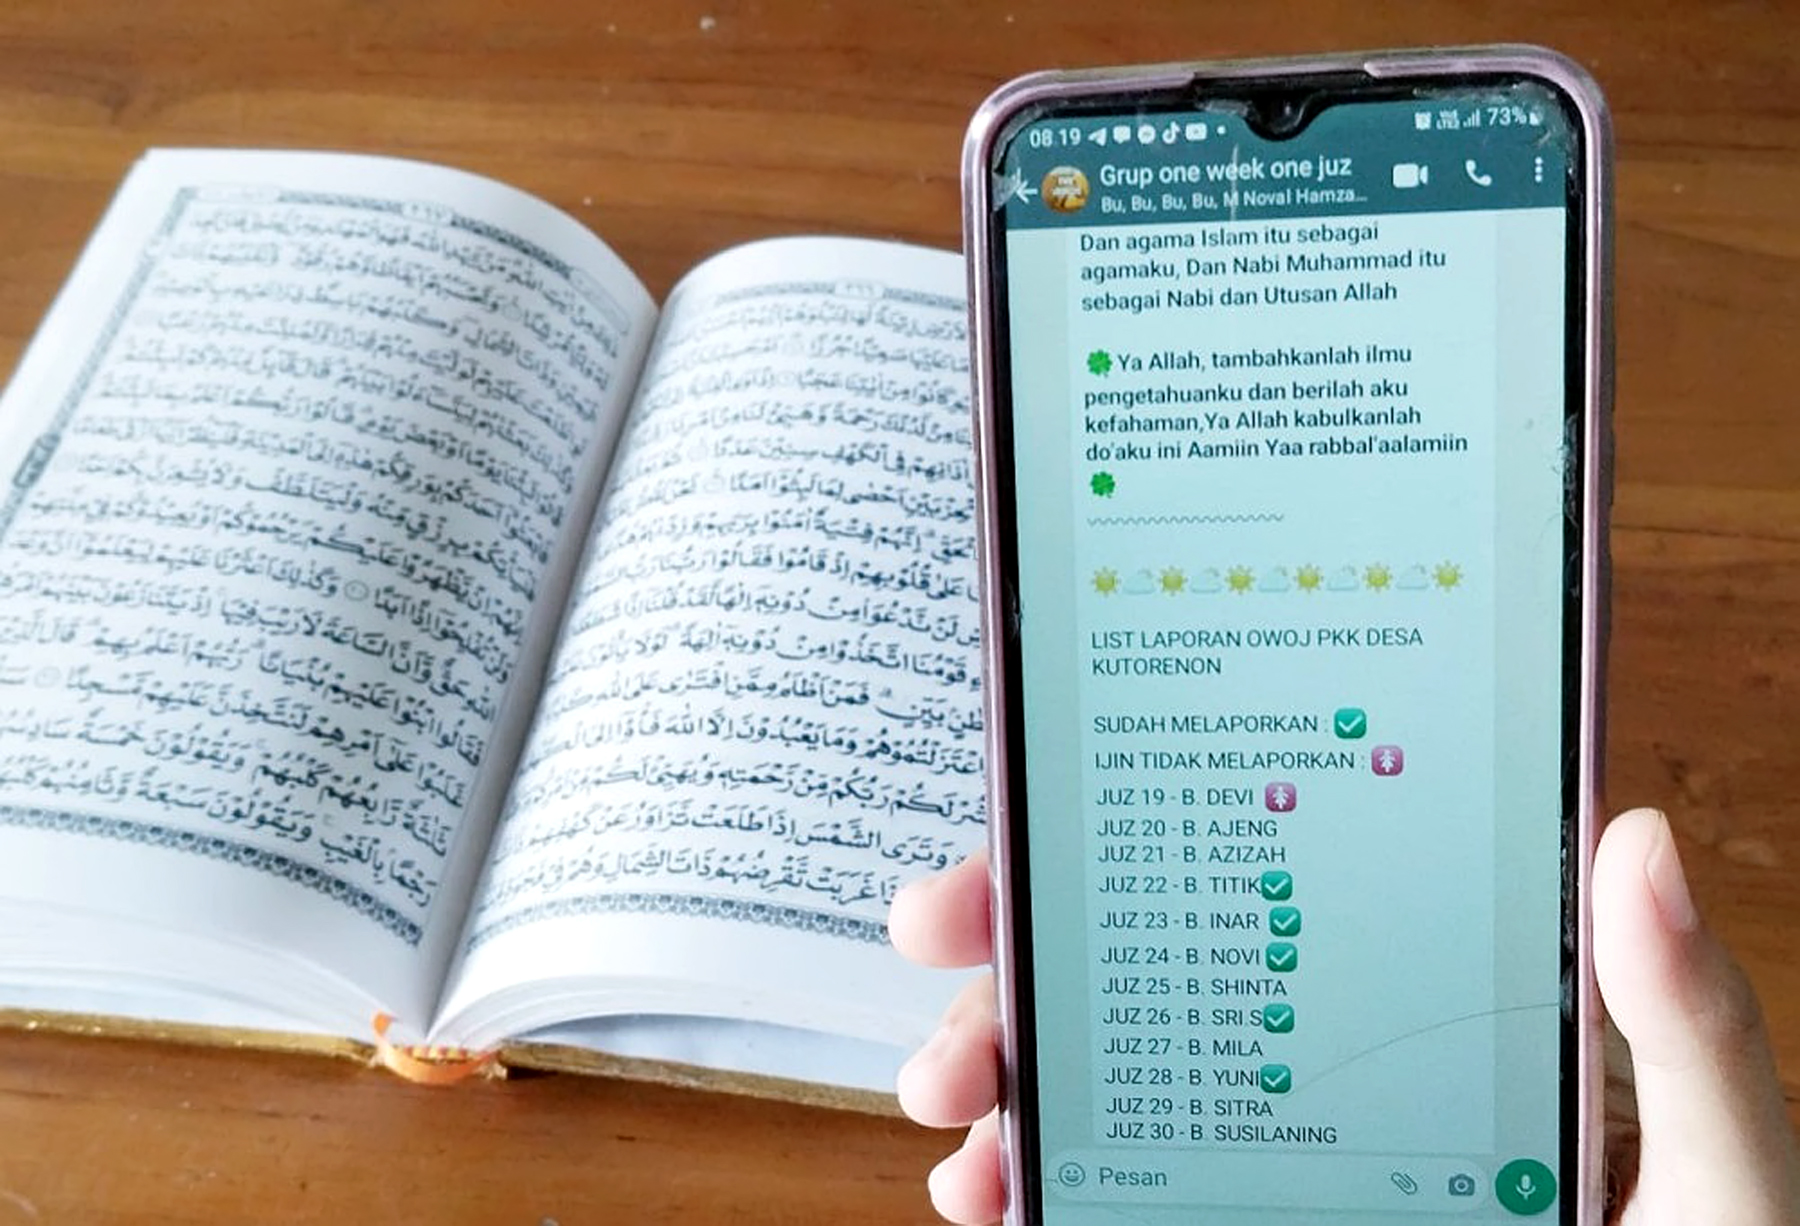 One Week One Juz, Inovasi PKK Desa Kutorenon Lumajang untuk Galakkan Literasi Qur.'an Digital